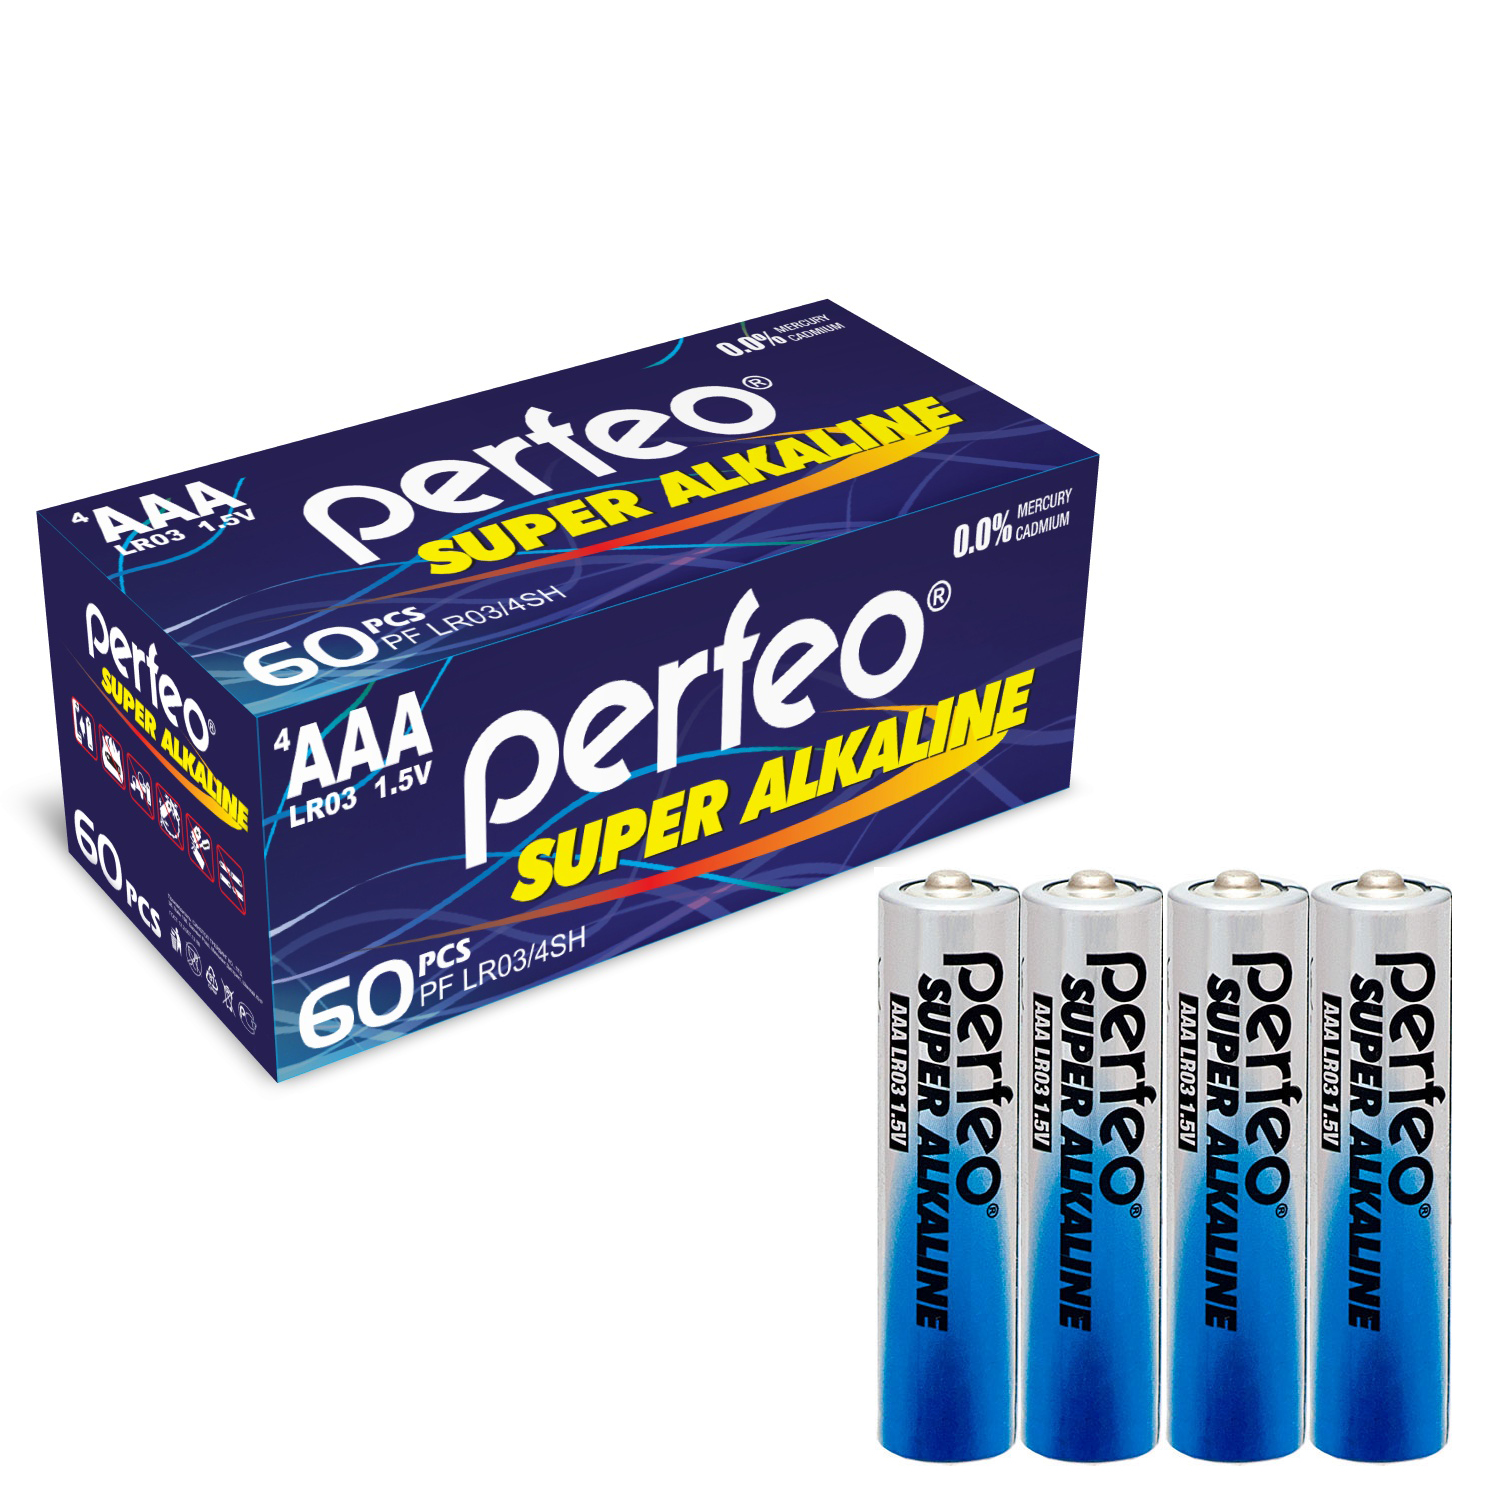 Батарейка Perfeo LR03/4SH Super Alkaline 60 шт батарейки perfeo super alkaline ааа lr03 10 шт